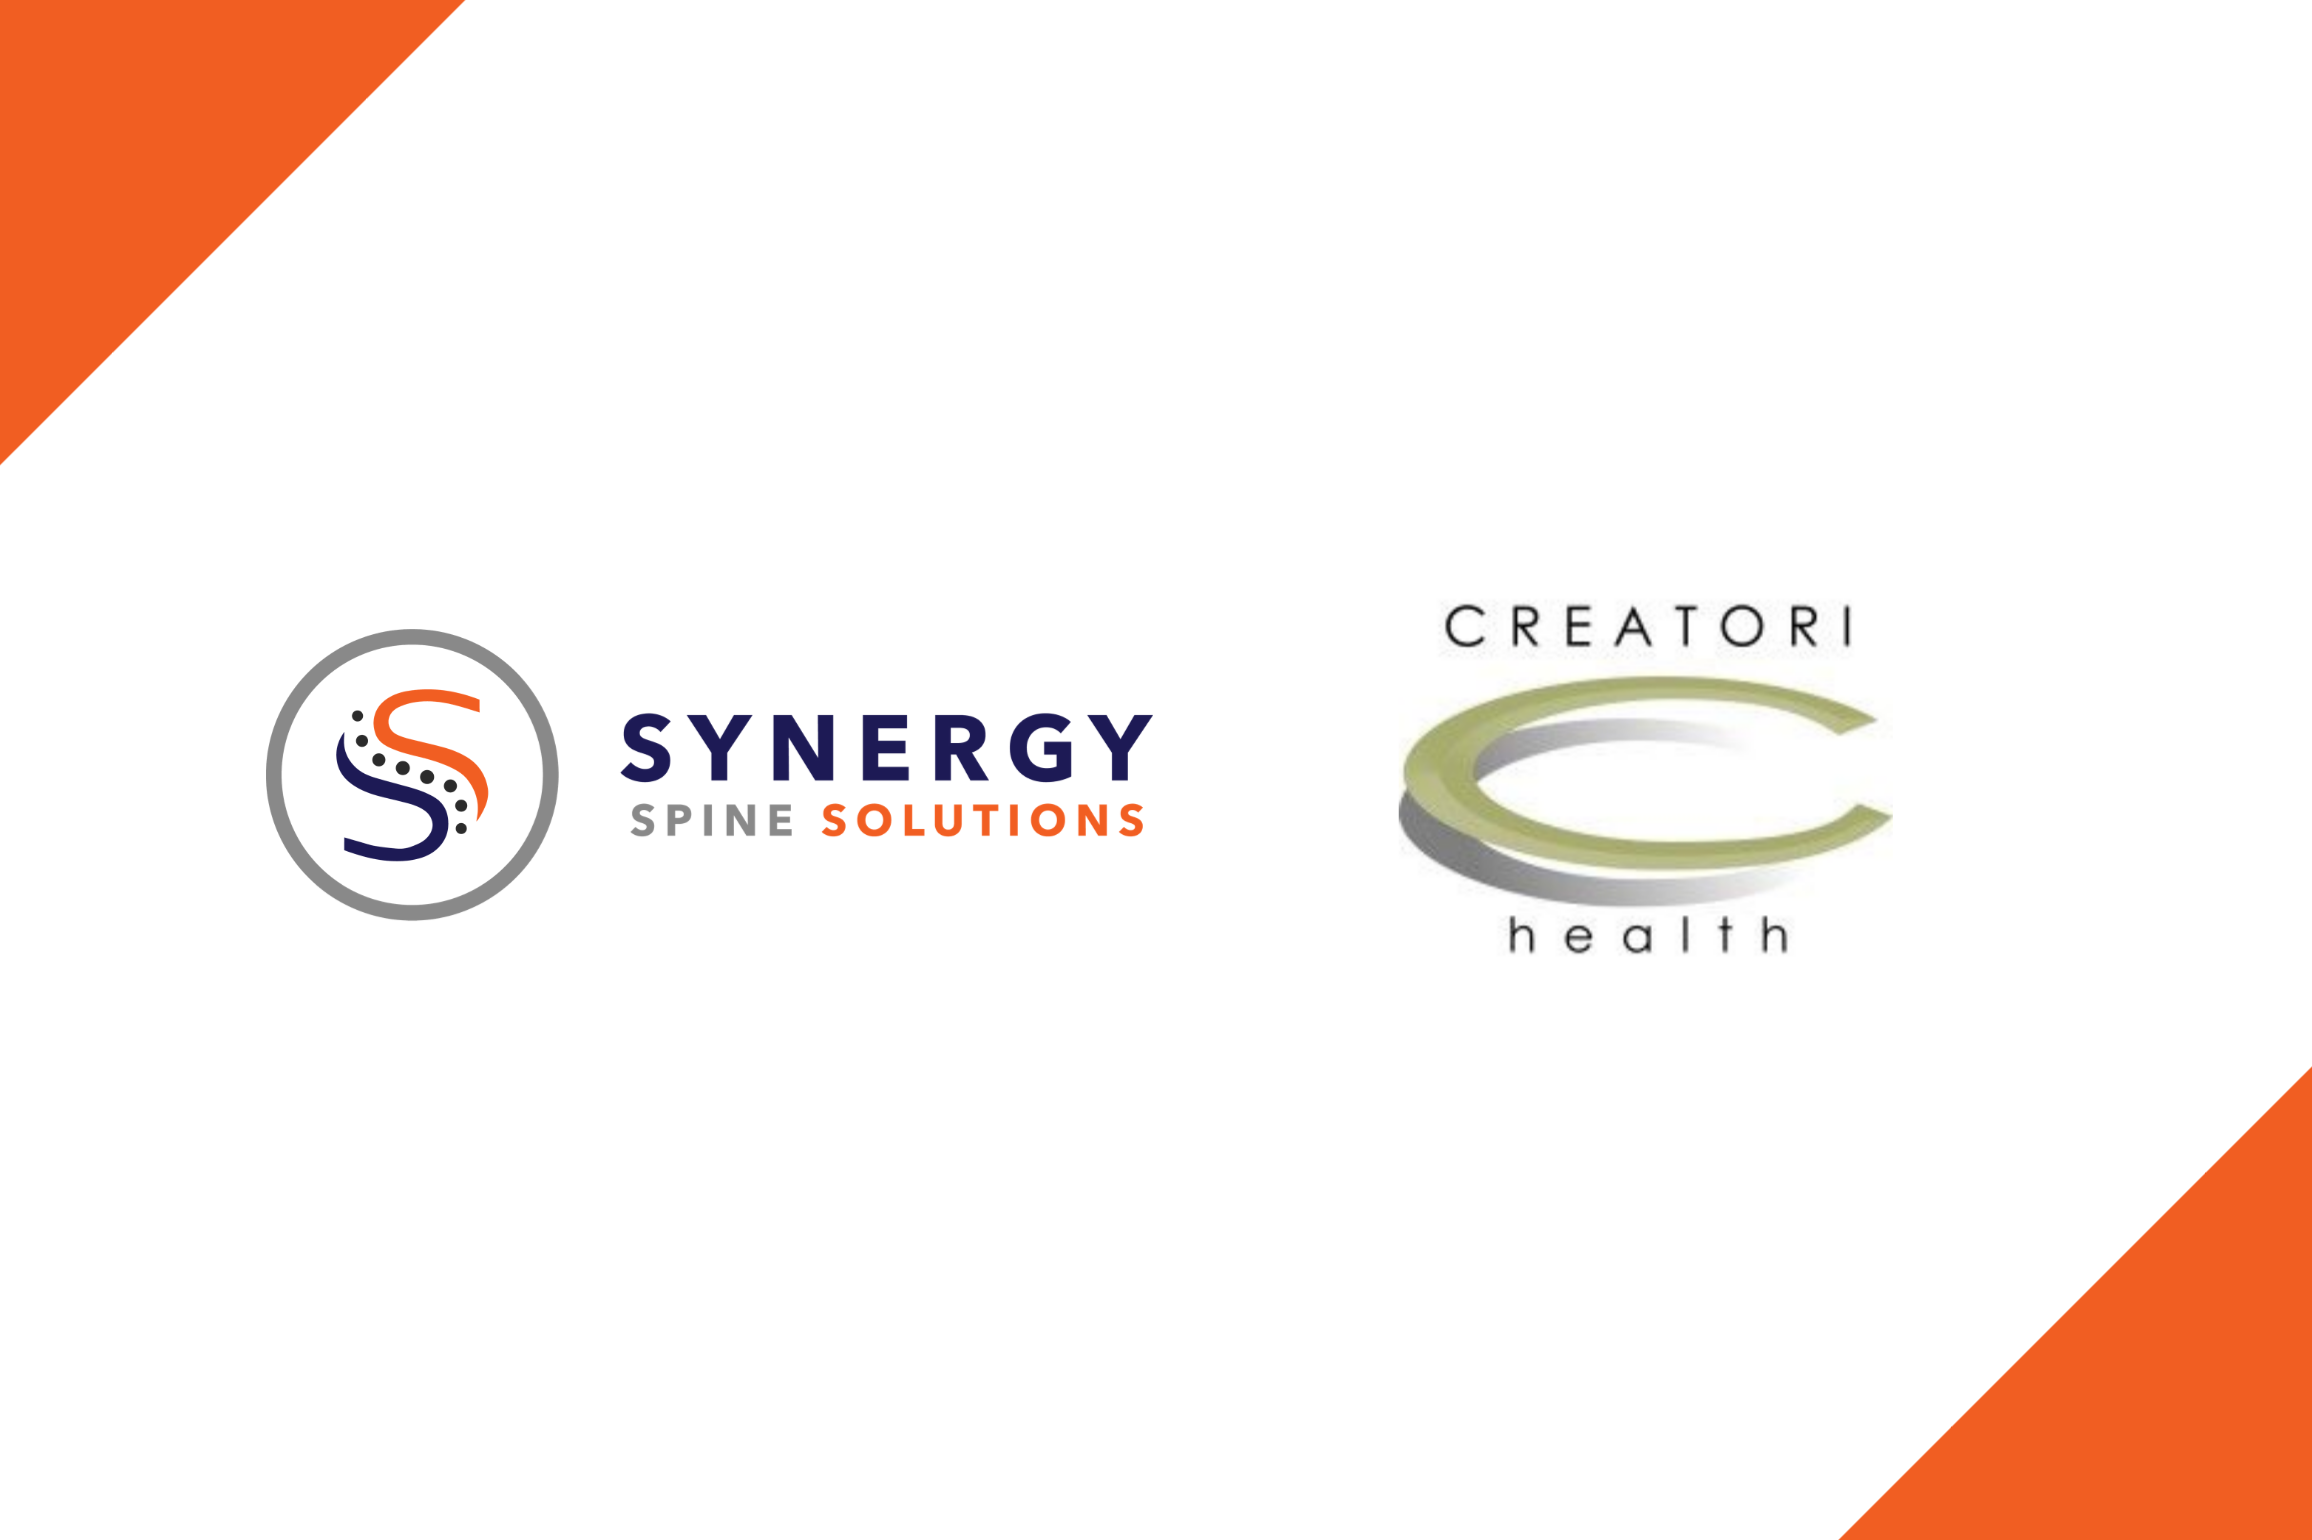 Synergy partner with Creatori Health